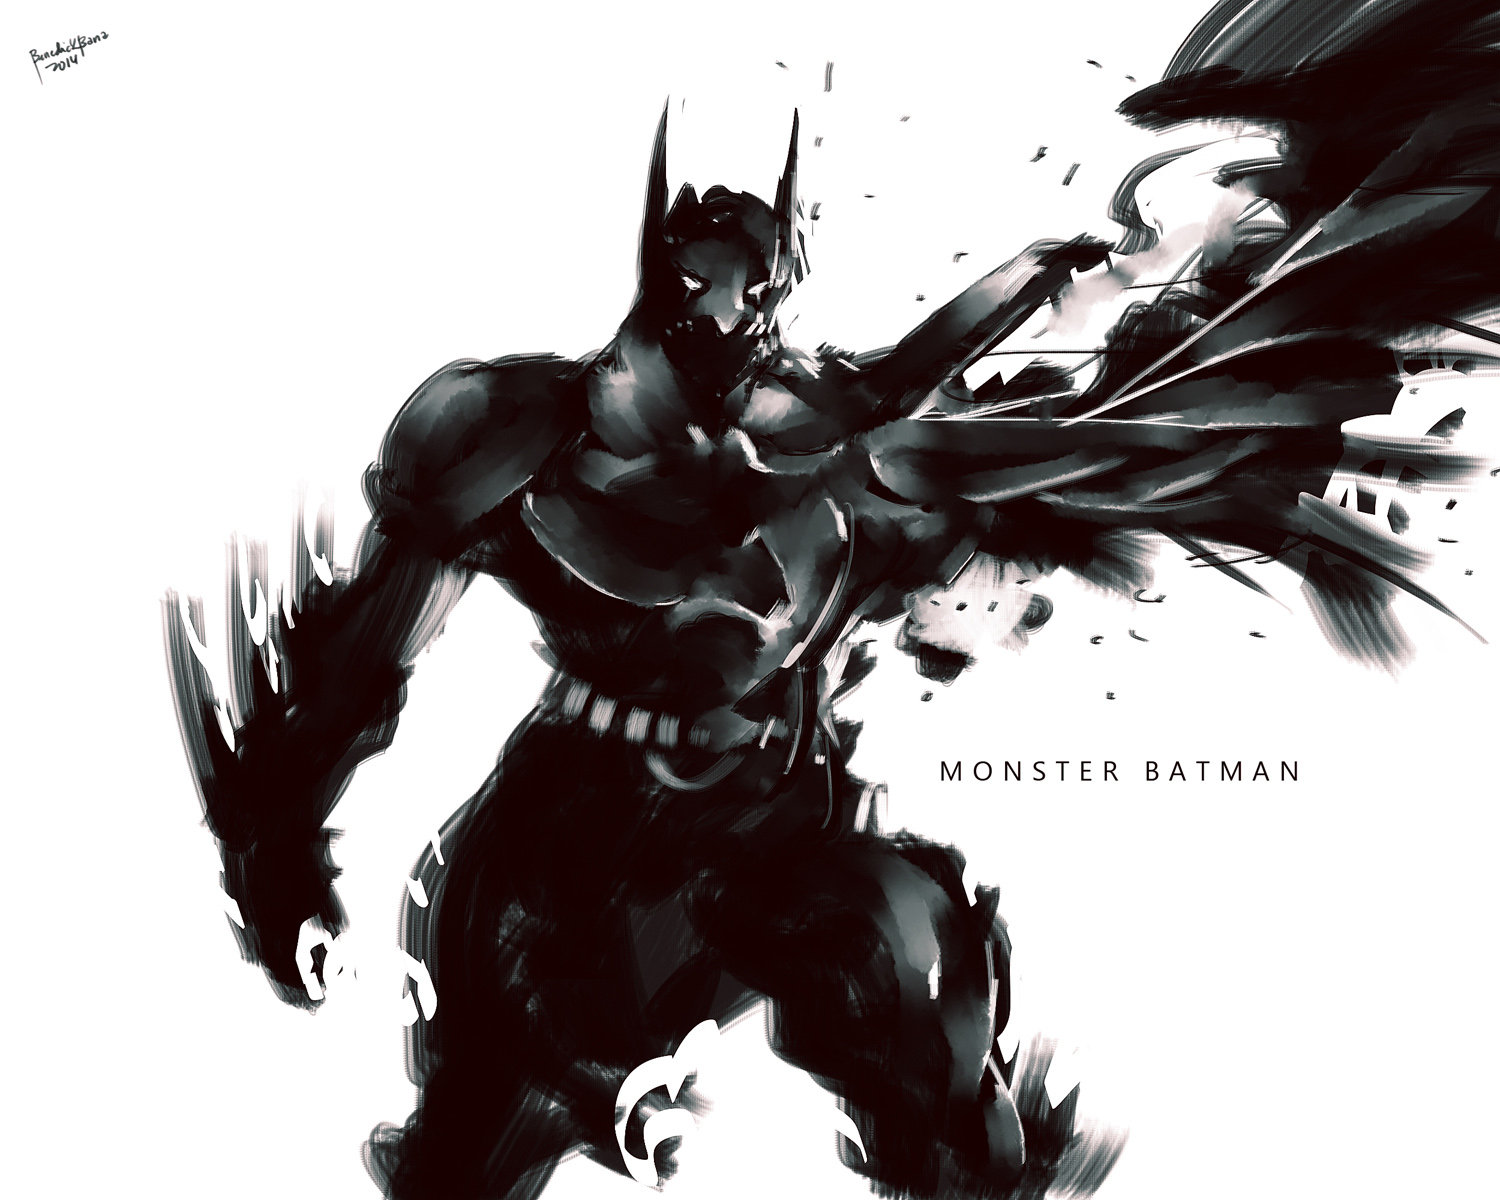 ArtStation - Speedpaint Monster Batman